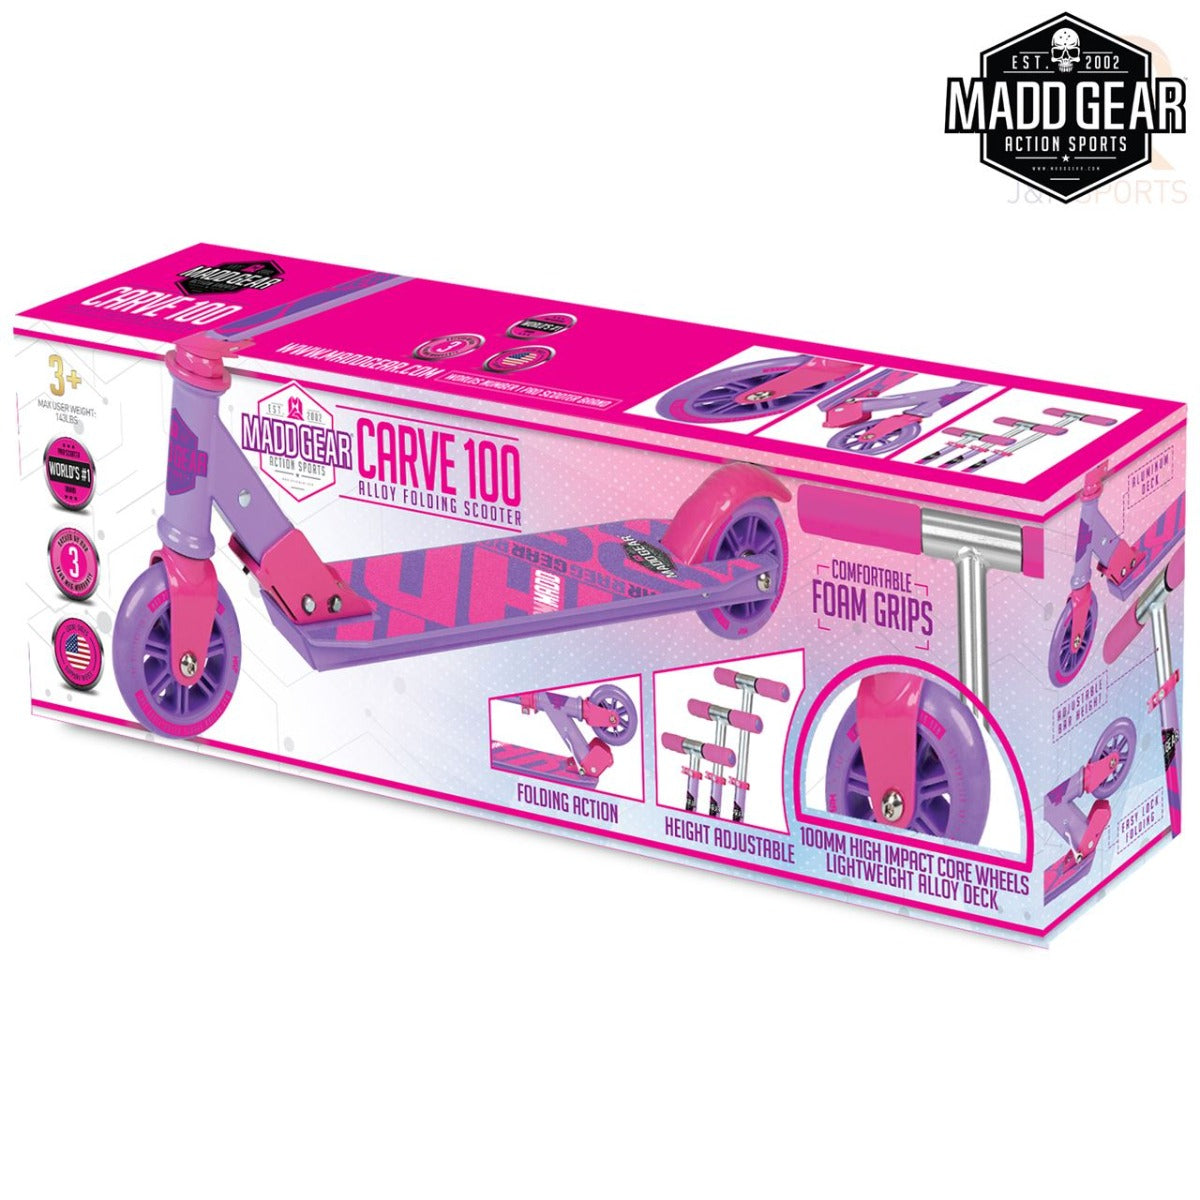 Madd Gear MGP Carve 100 Foldable Scooter - Purple / Pink - Box